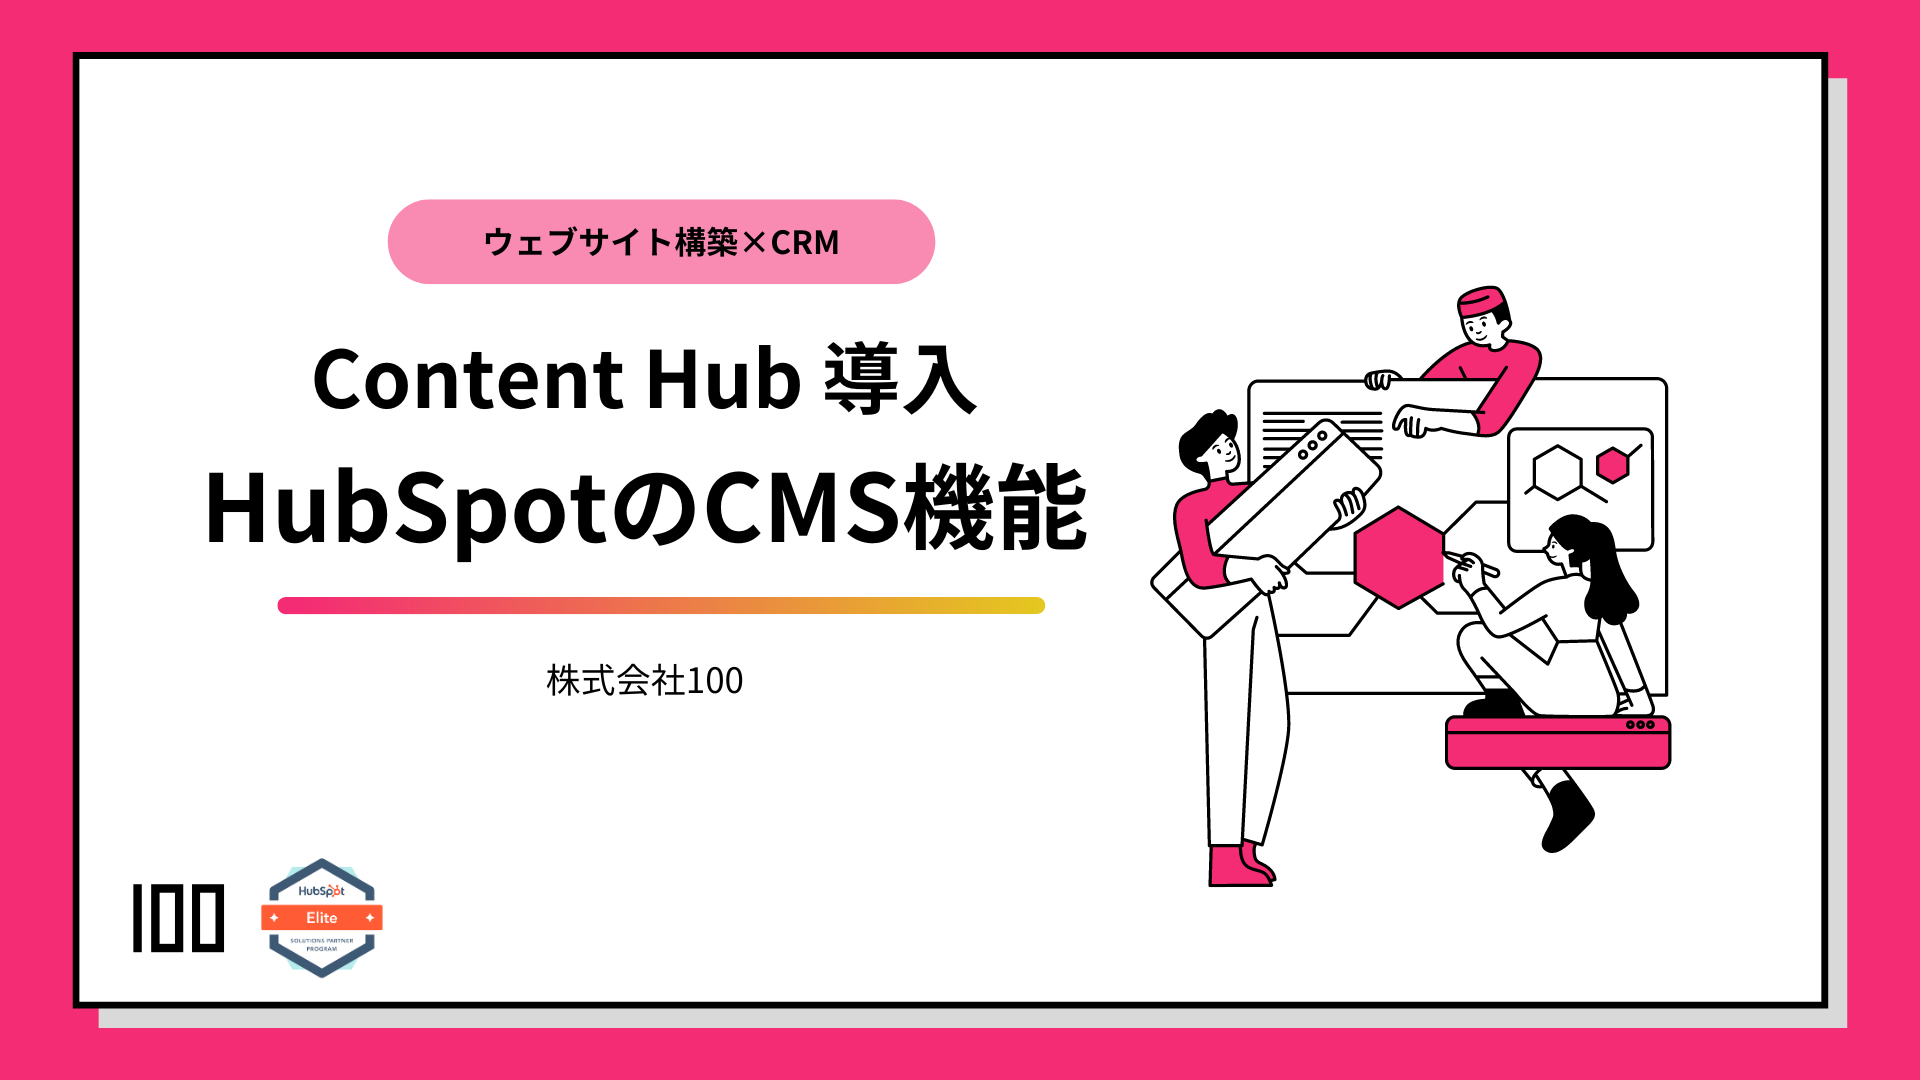 Content Hub導入 HubSpot CMS機能